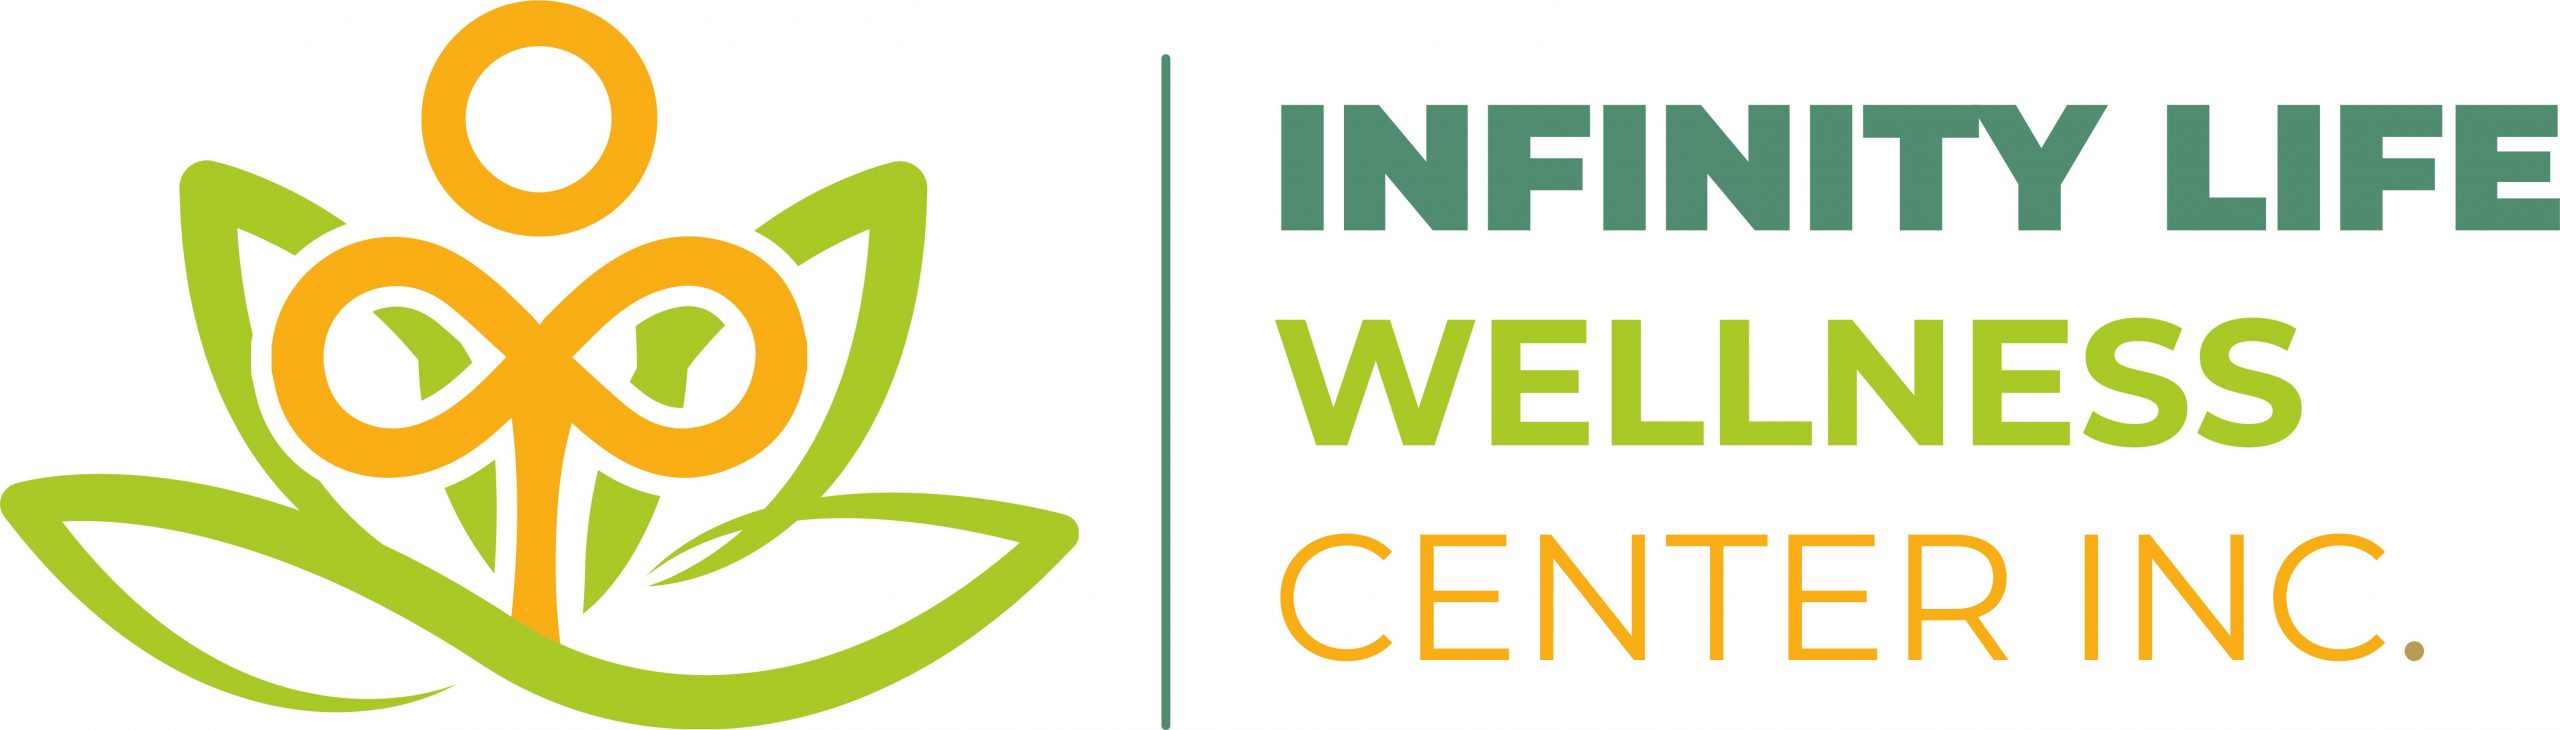 Infinity Life Wellness Center logo